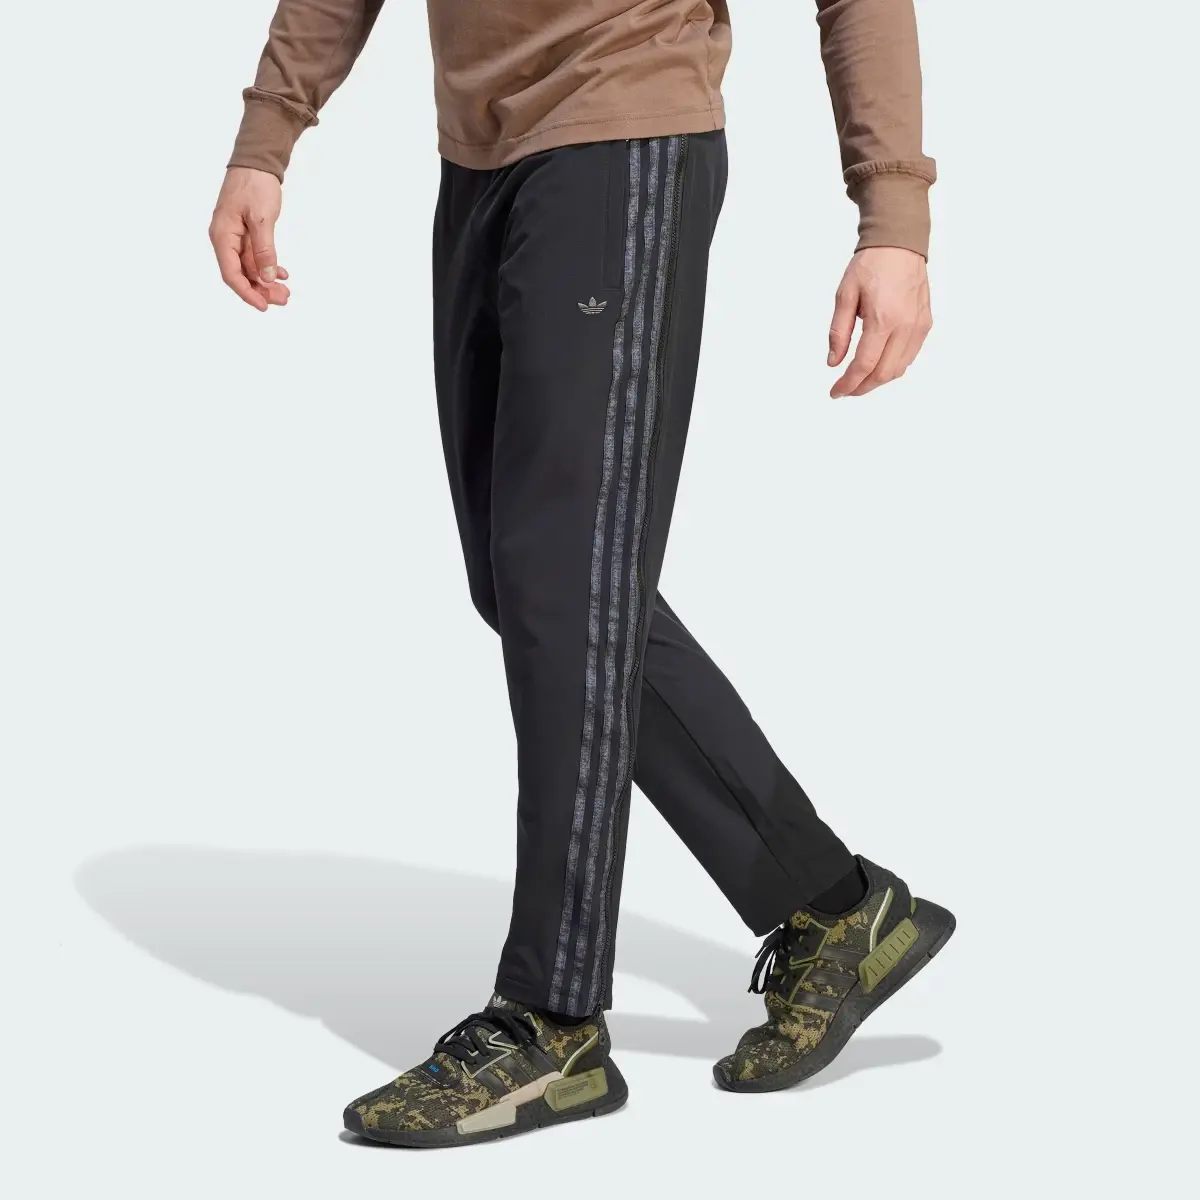 Adidas Spodnie adidas Adventure Slim. 1